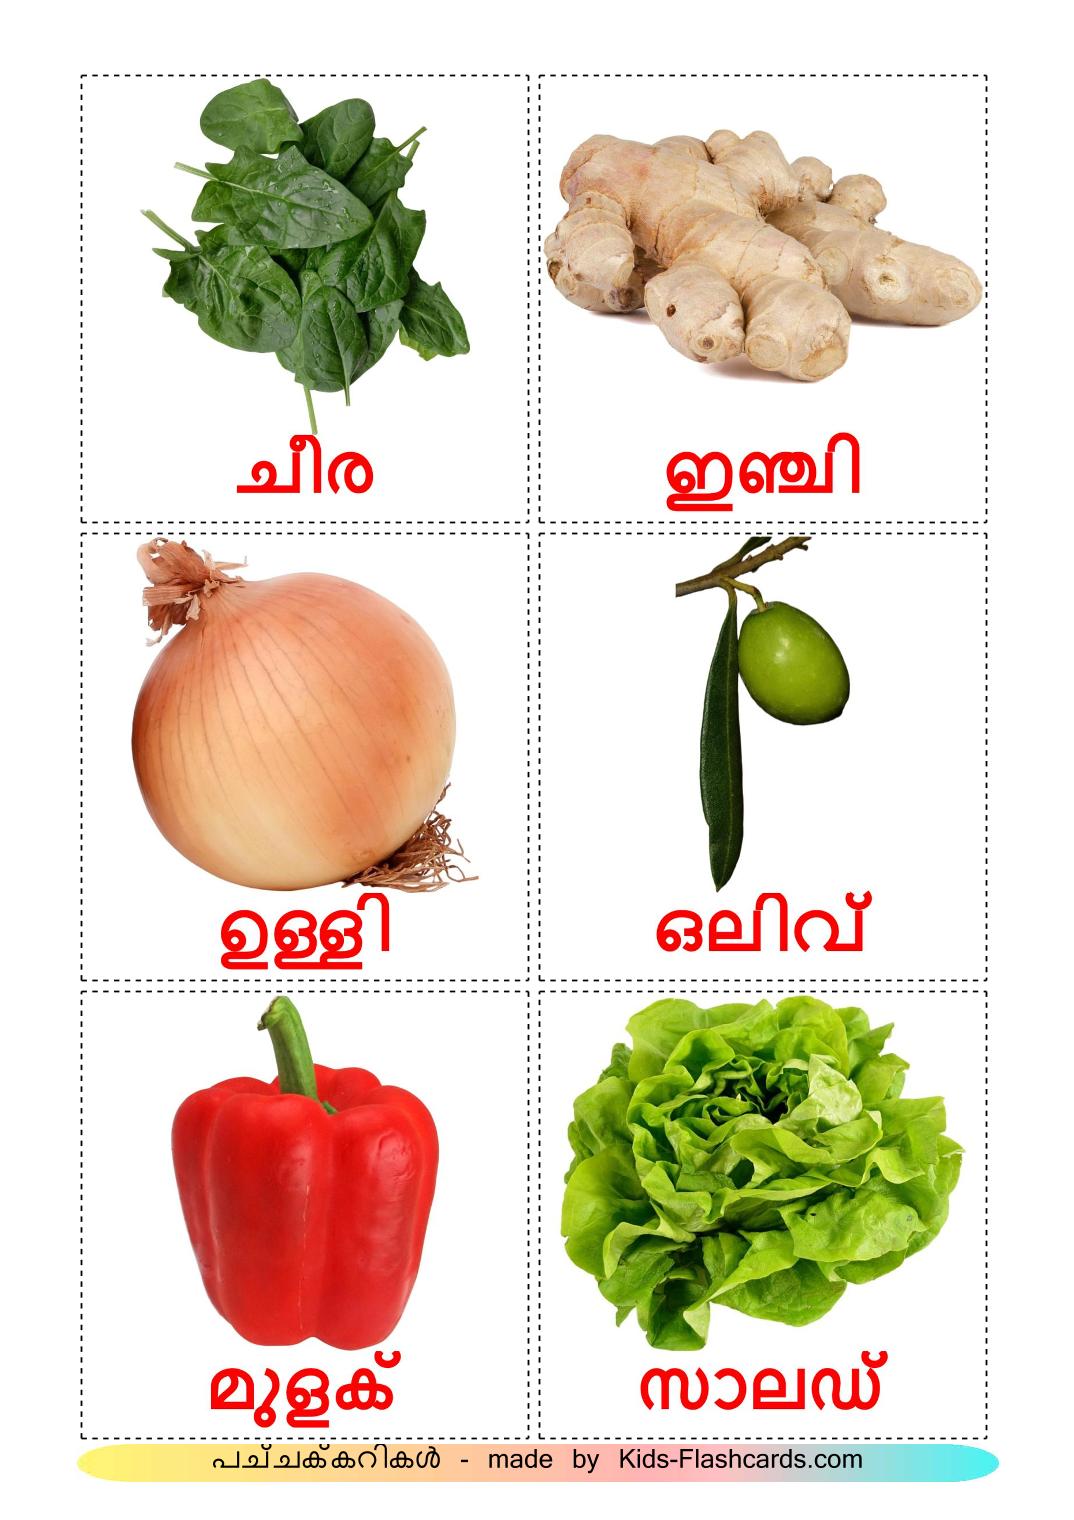 La verdura - 29 flashcards malayalam stampabili gratuitamente